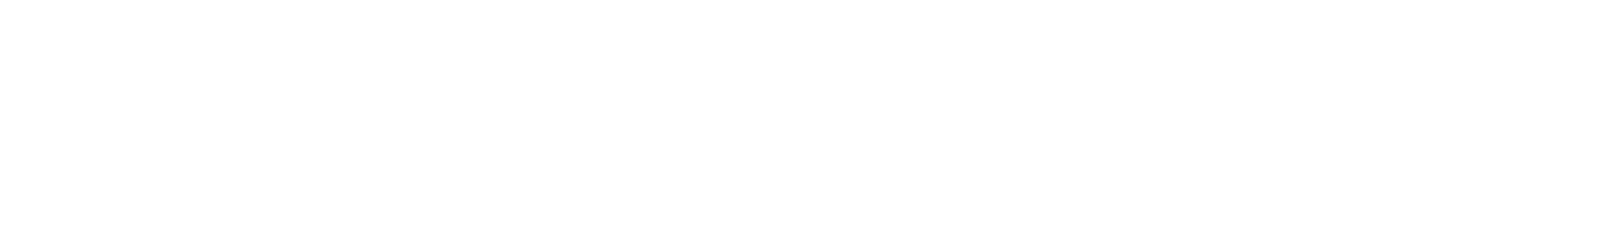 little HEARTS.